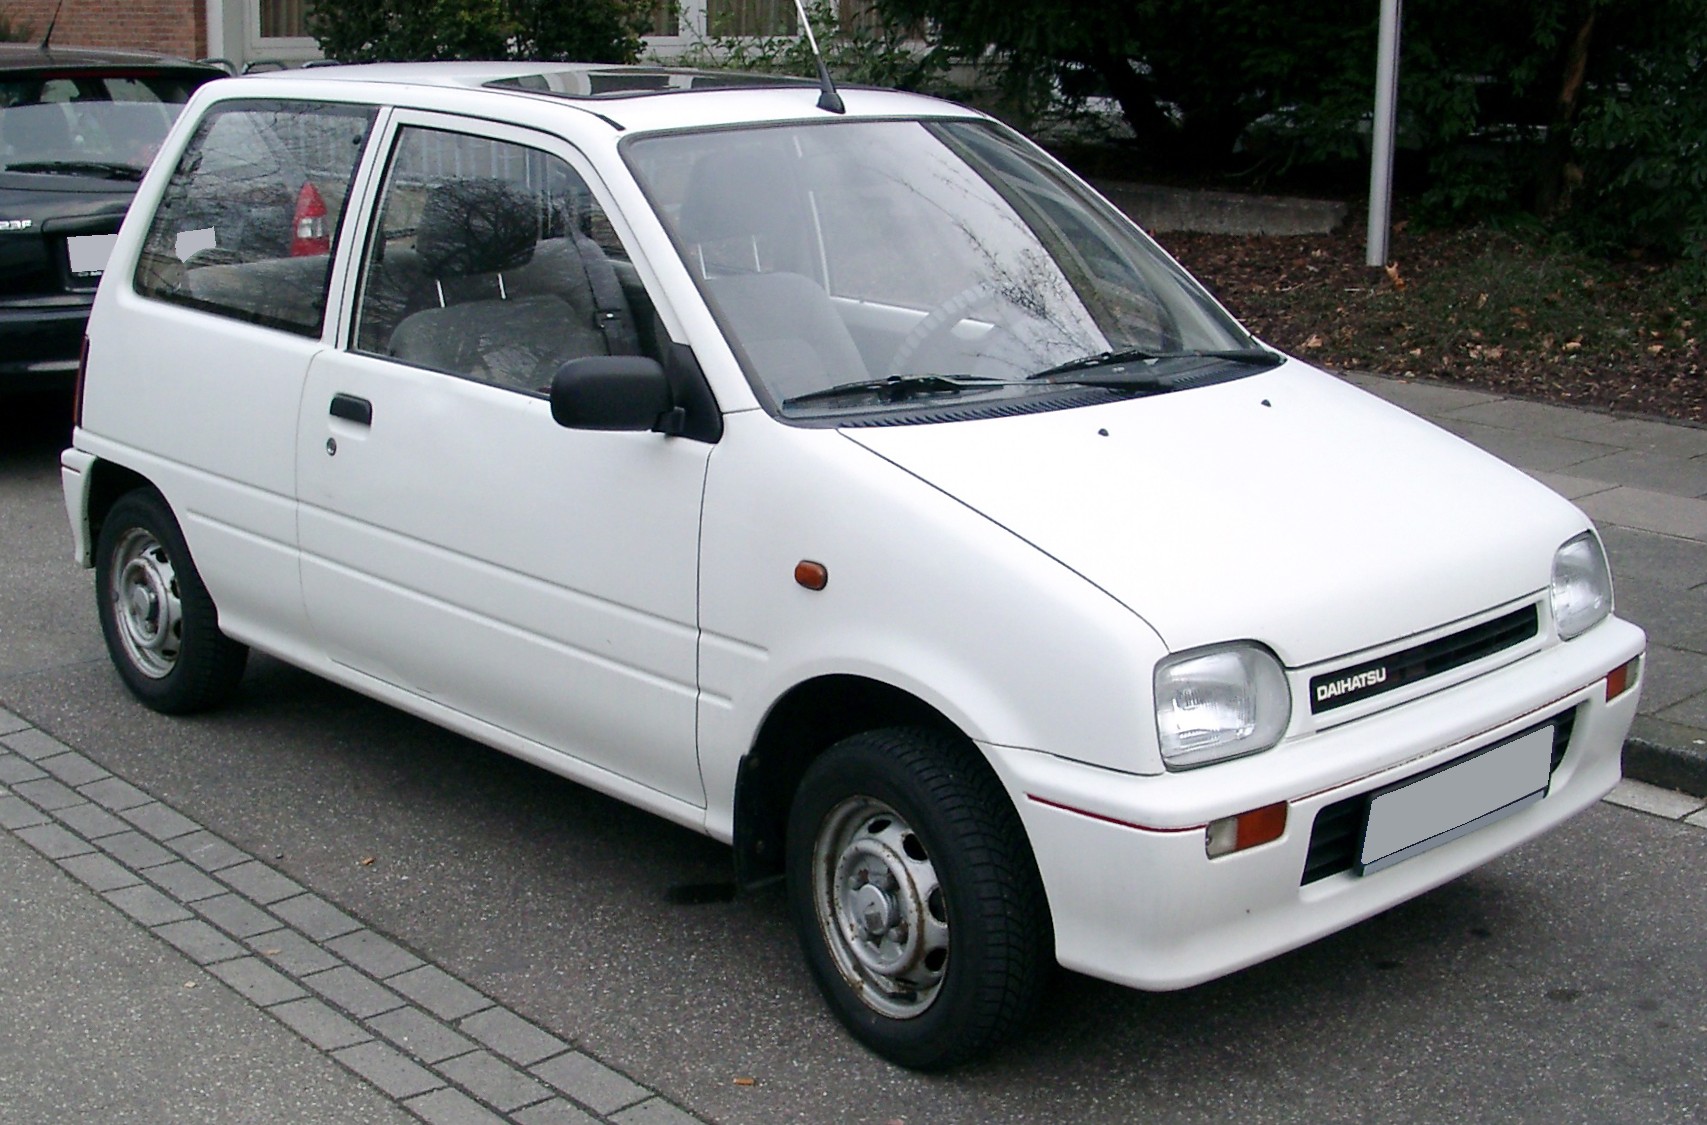 File:Daihatsu Cuore front 20080222.jpg - Wikimedia Commons